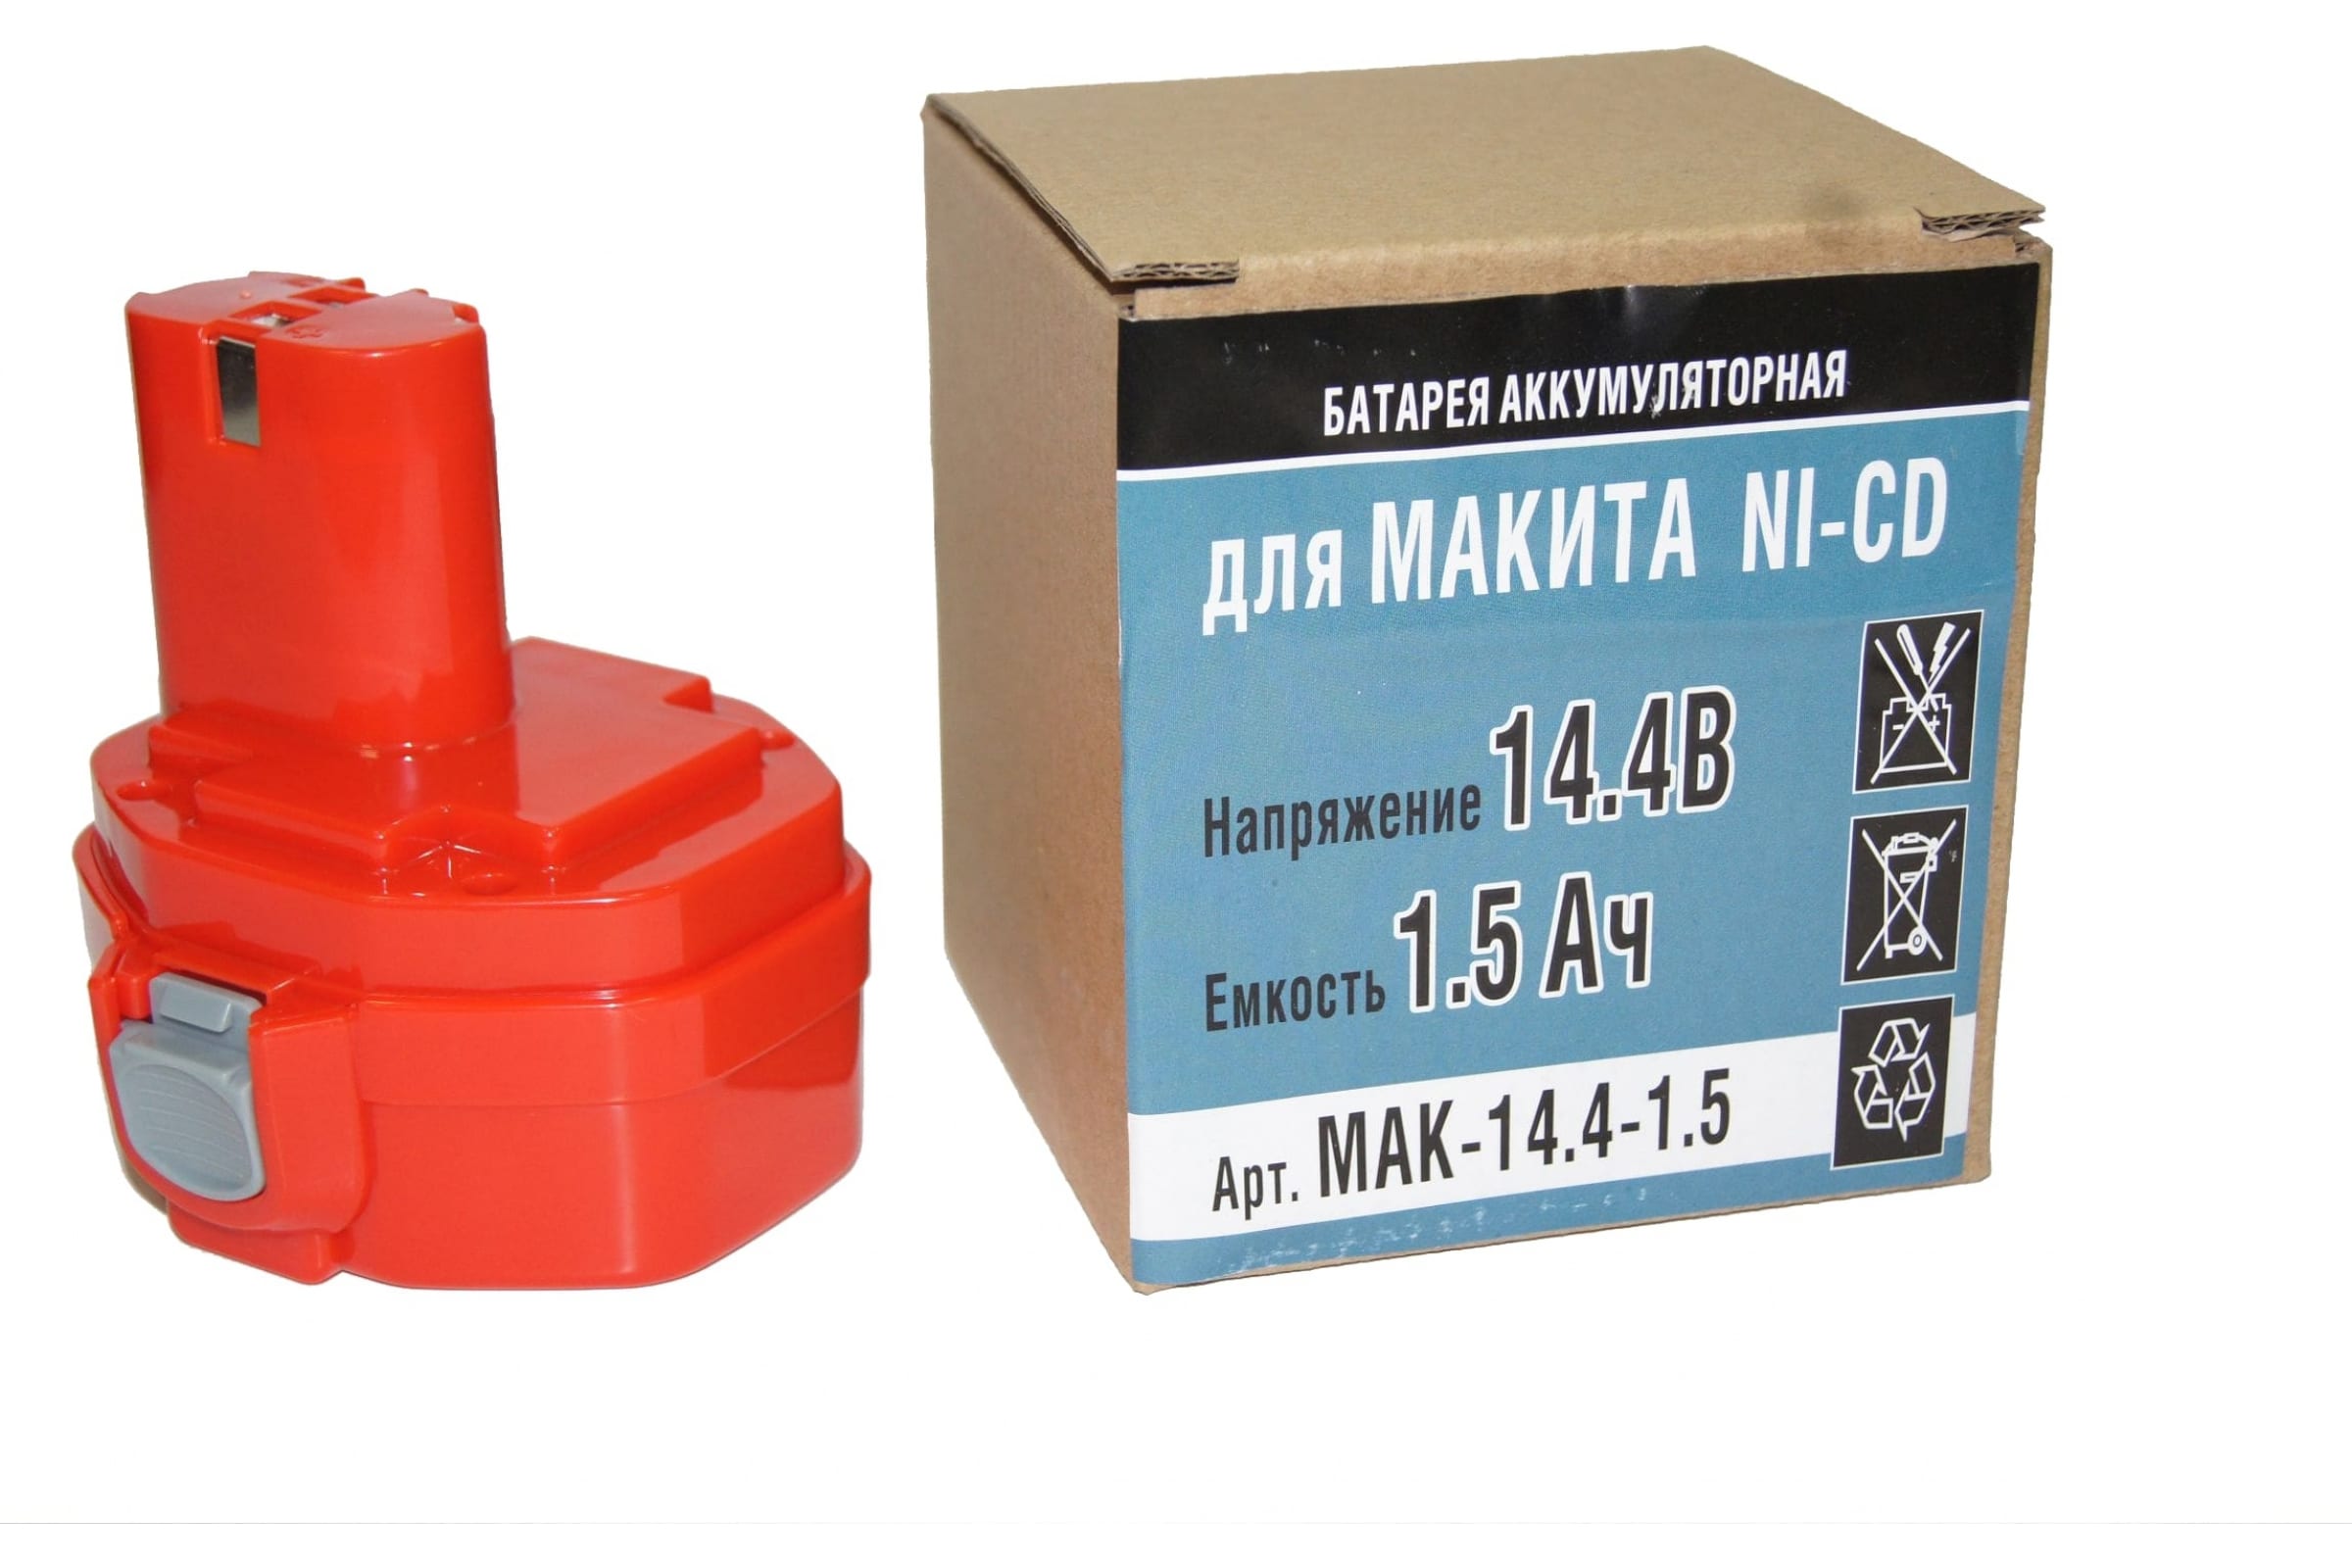 P.I.T. Аккумулятор Ni-CD 14,4V 1.5 AН Makita подходит к 6281DWPE кор. Mak-14,4-1,5